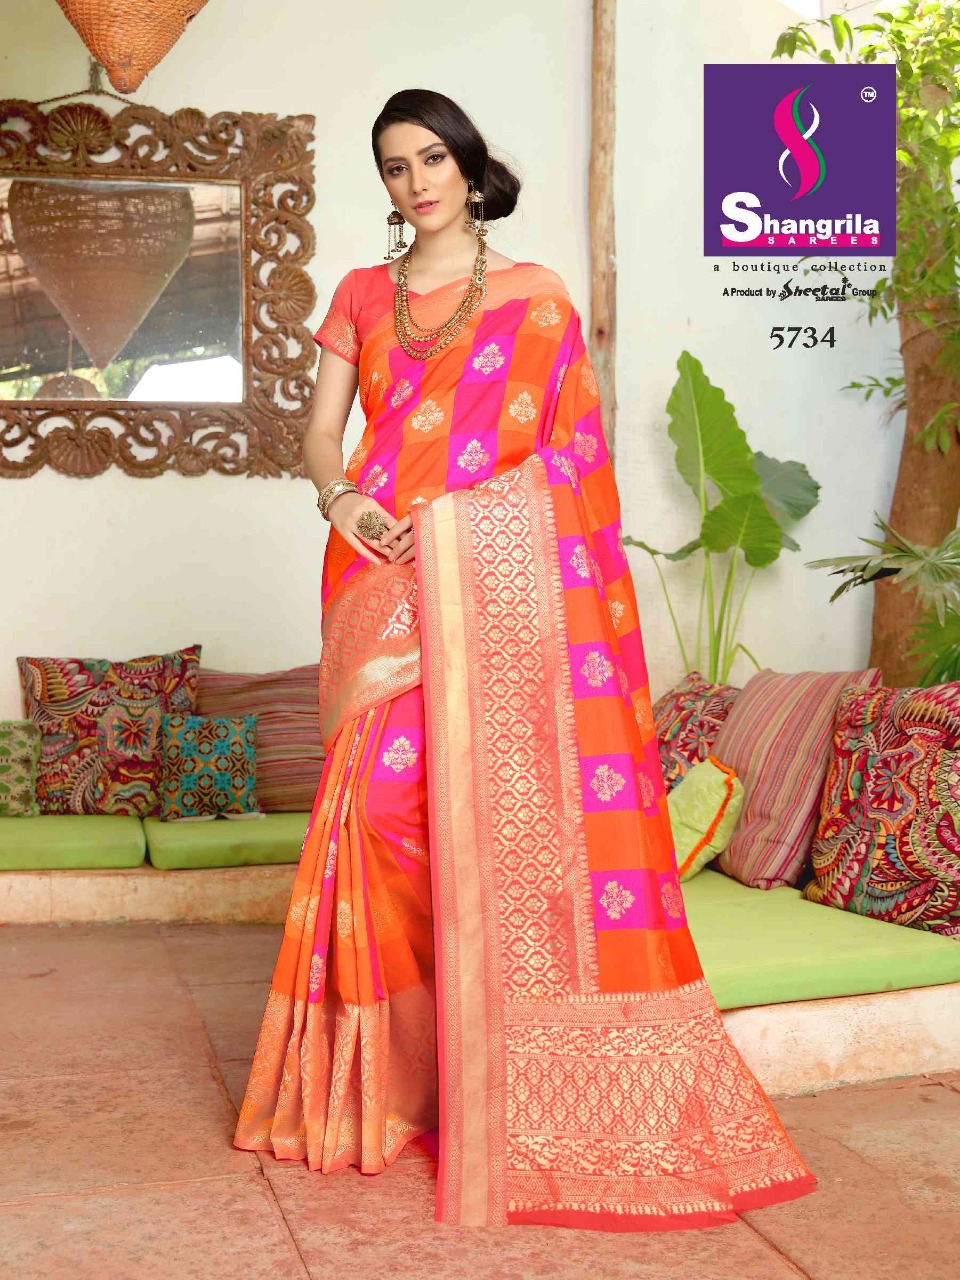 Shangrila gauri silk exculsive collection of colorful sarres